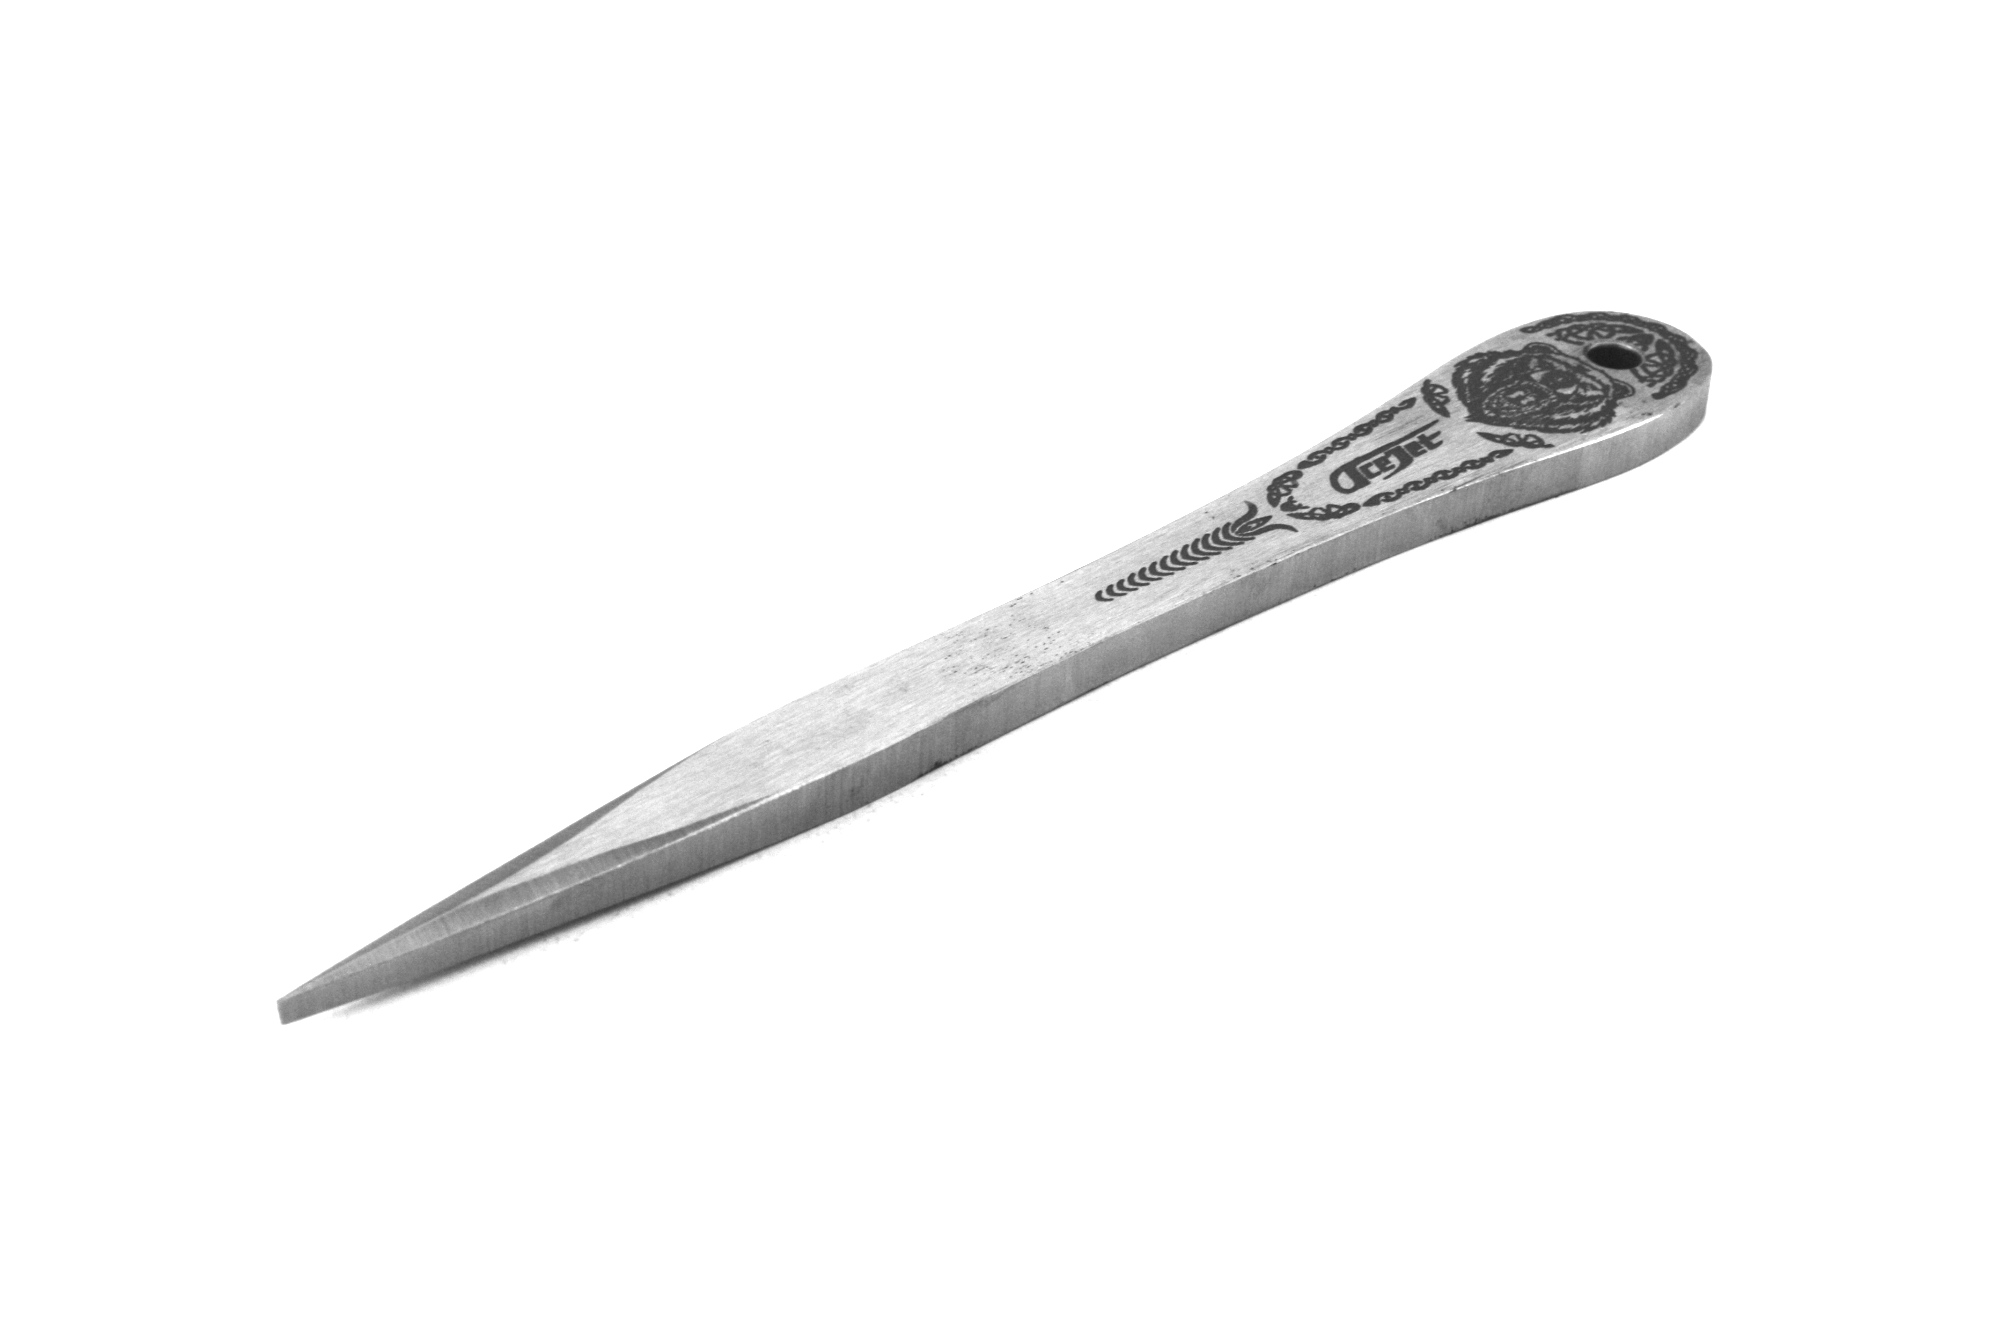 Throwing Knives, ACEJET STINGER D2 Viking - Throwing knife - set of 3, ACEJET Store